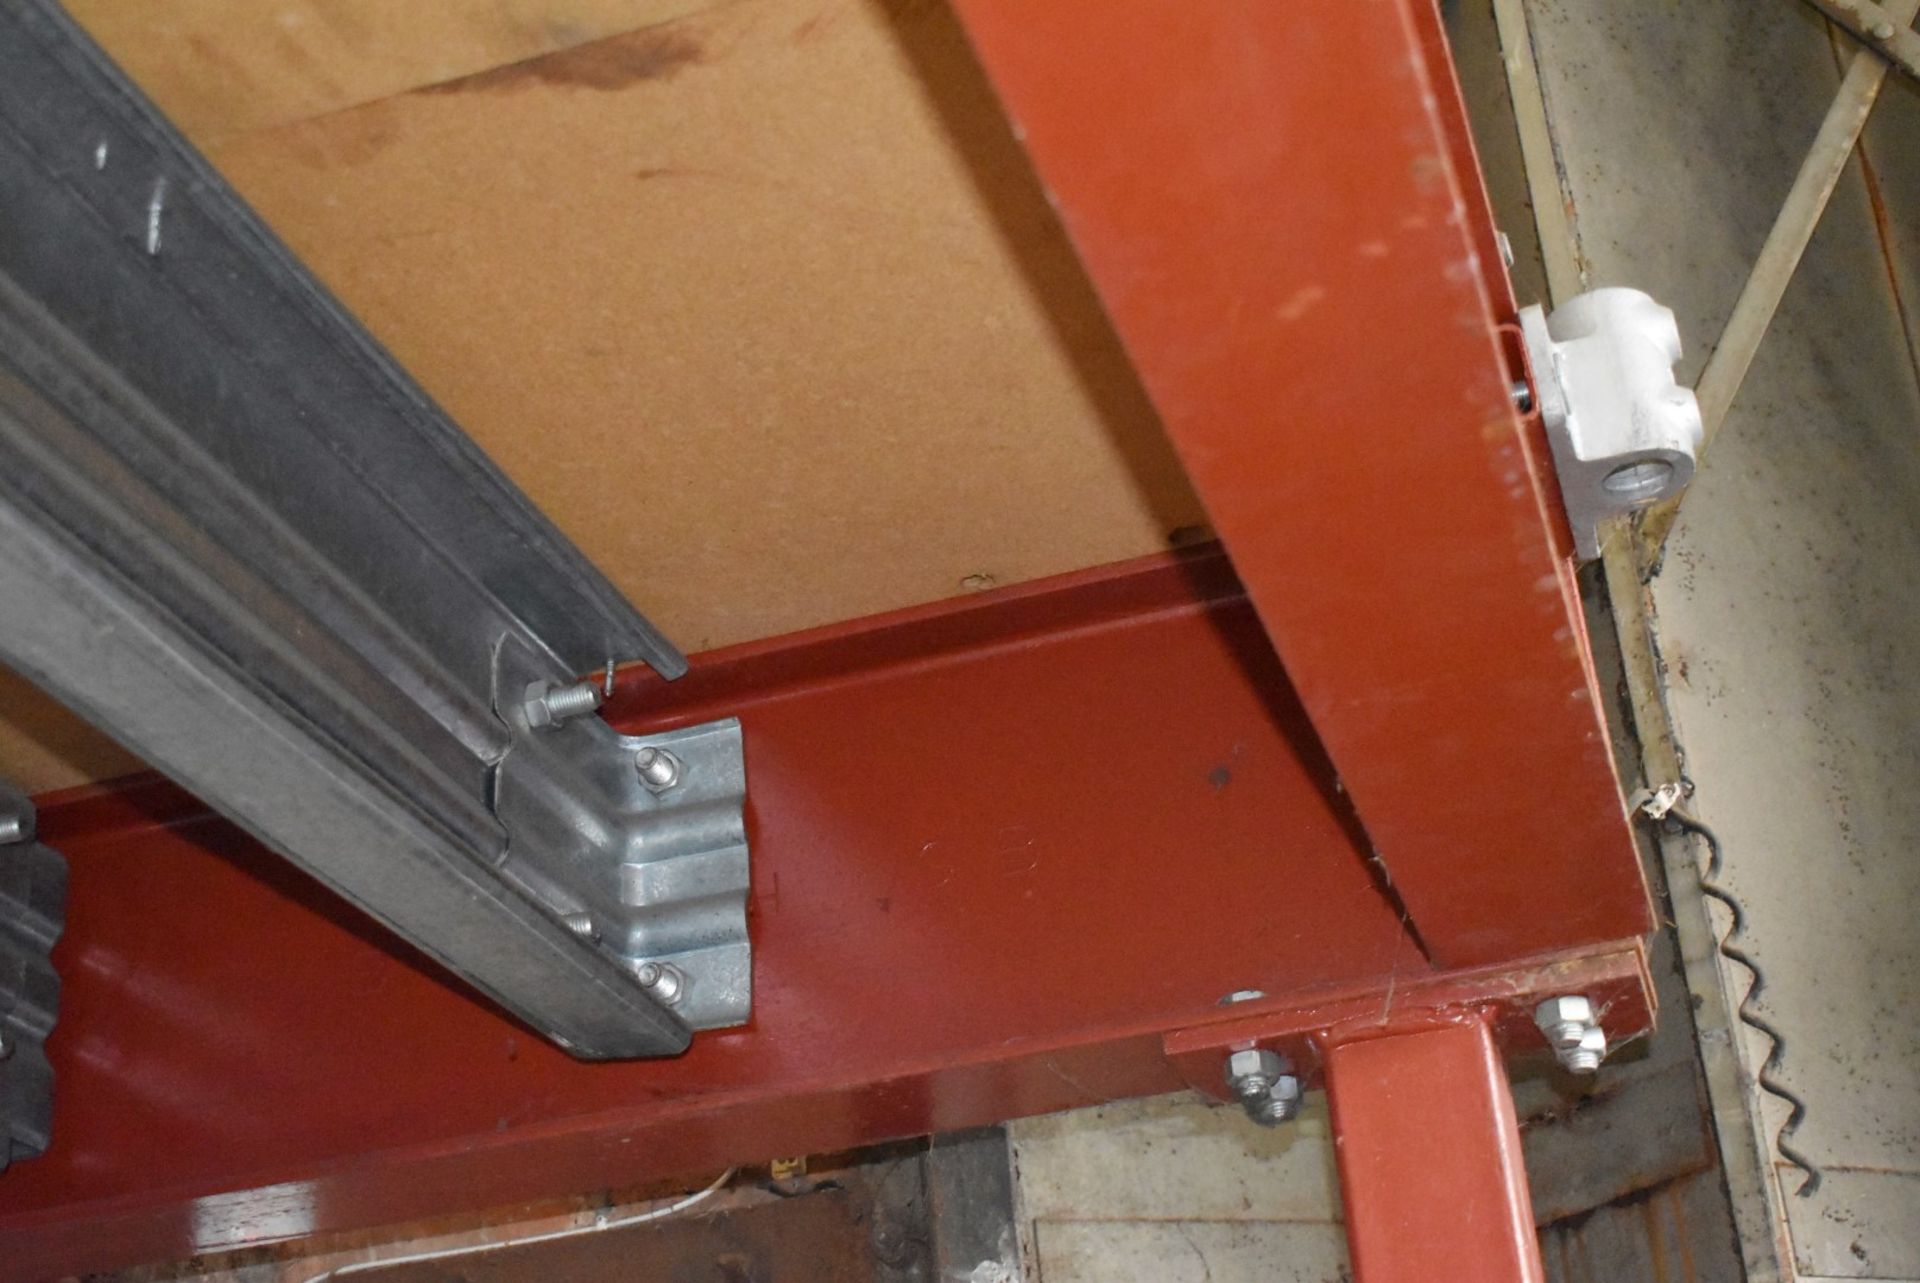 1 x Mezzanine Floor - Heavy Duty Steel Construction With Access Ladder - Size: W1000 x D325 cms - Image 6 of 18